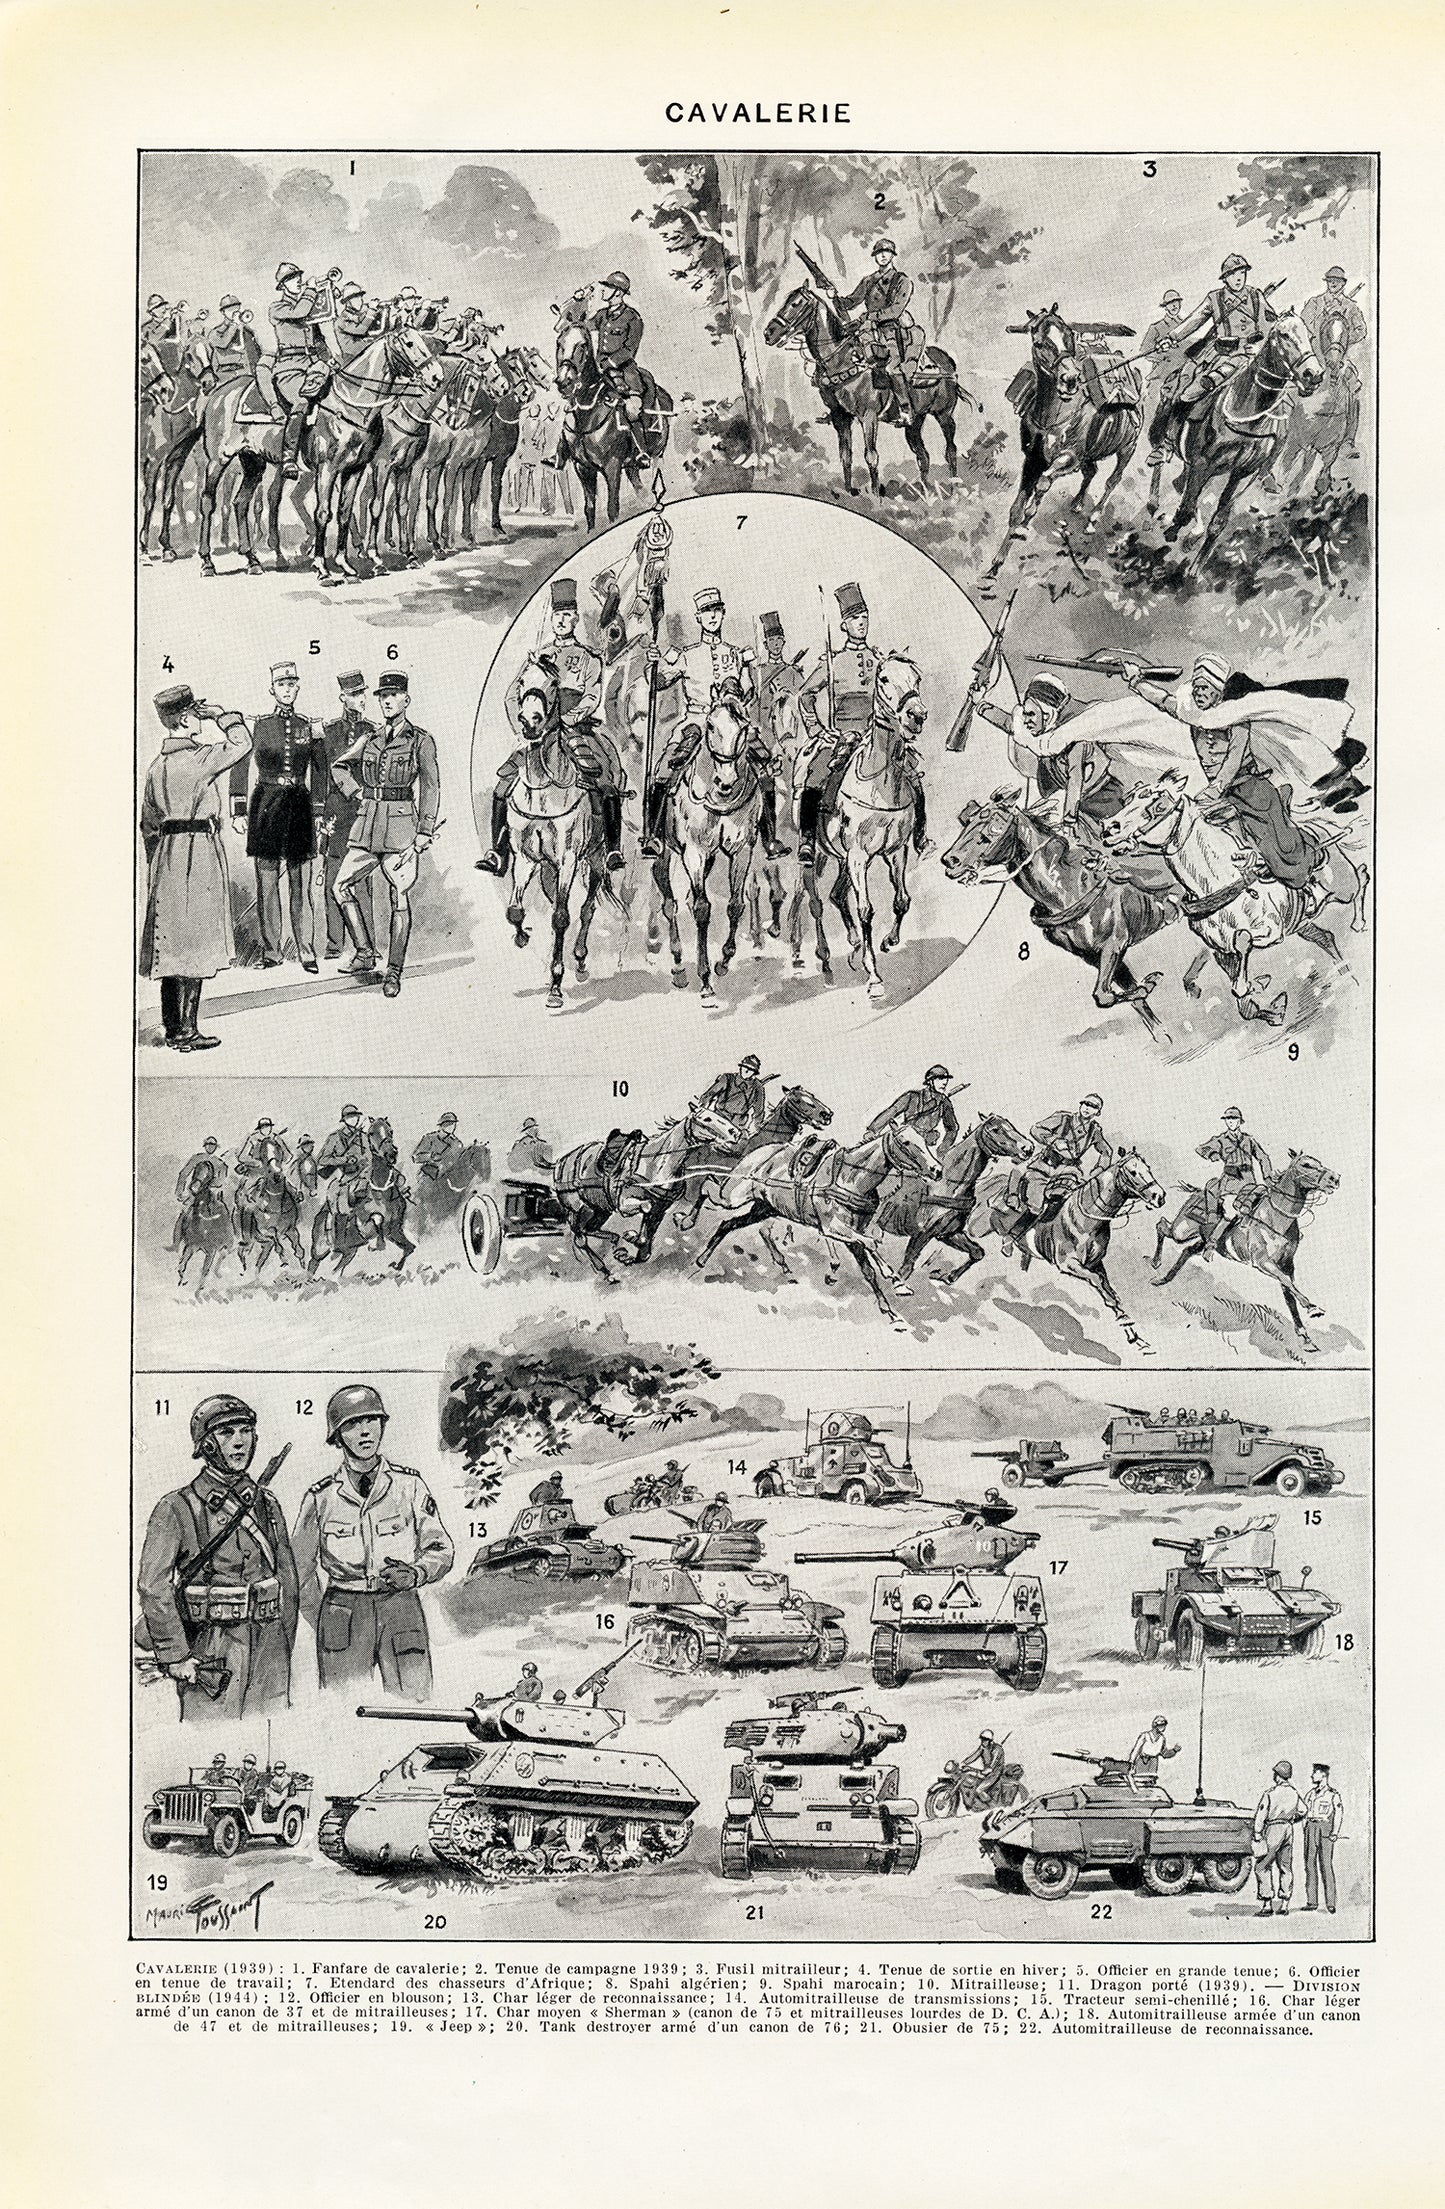 1948 Cavalry Print